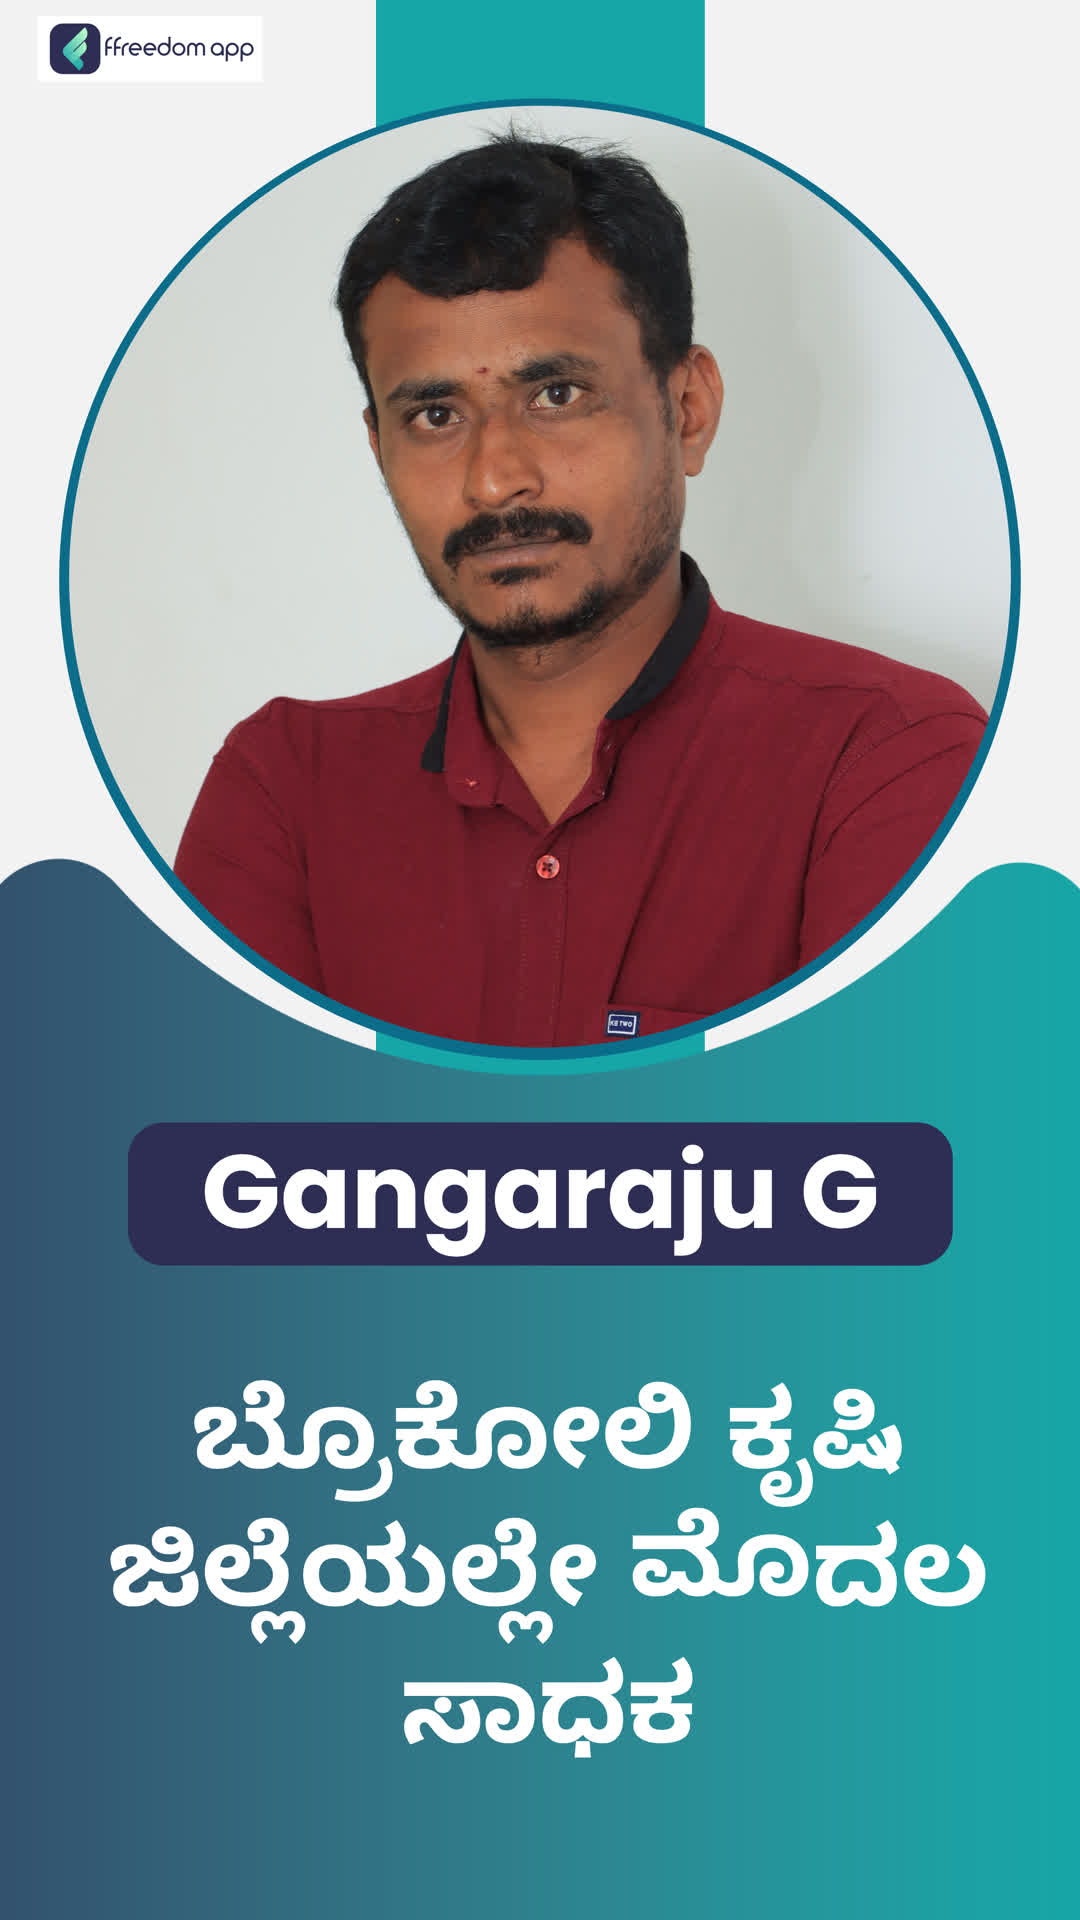 Gangaraju G's Honest Review of ffreedom app - Chikballapur ,Karnataka